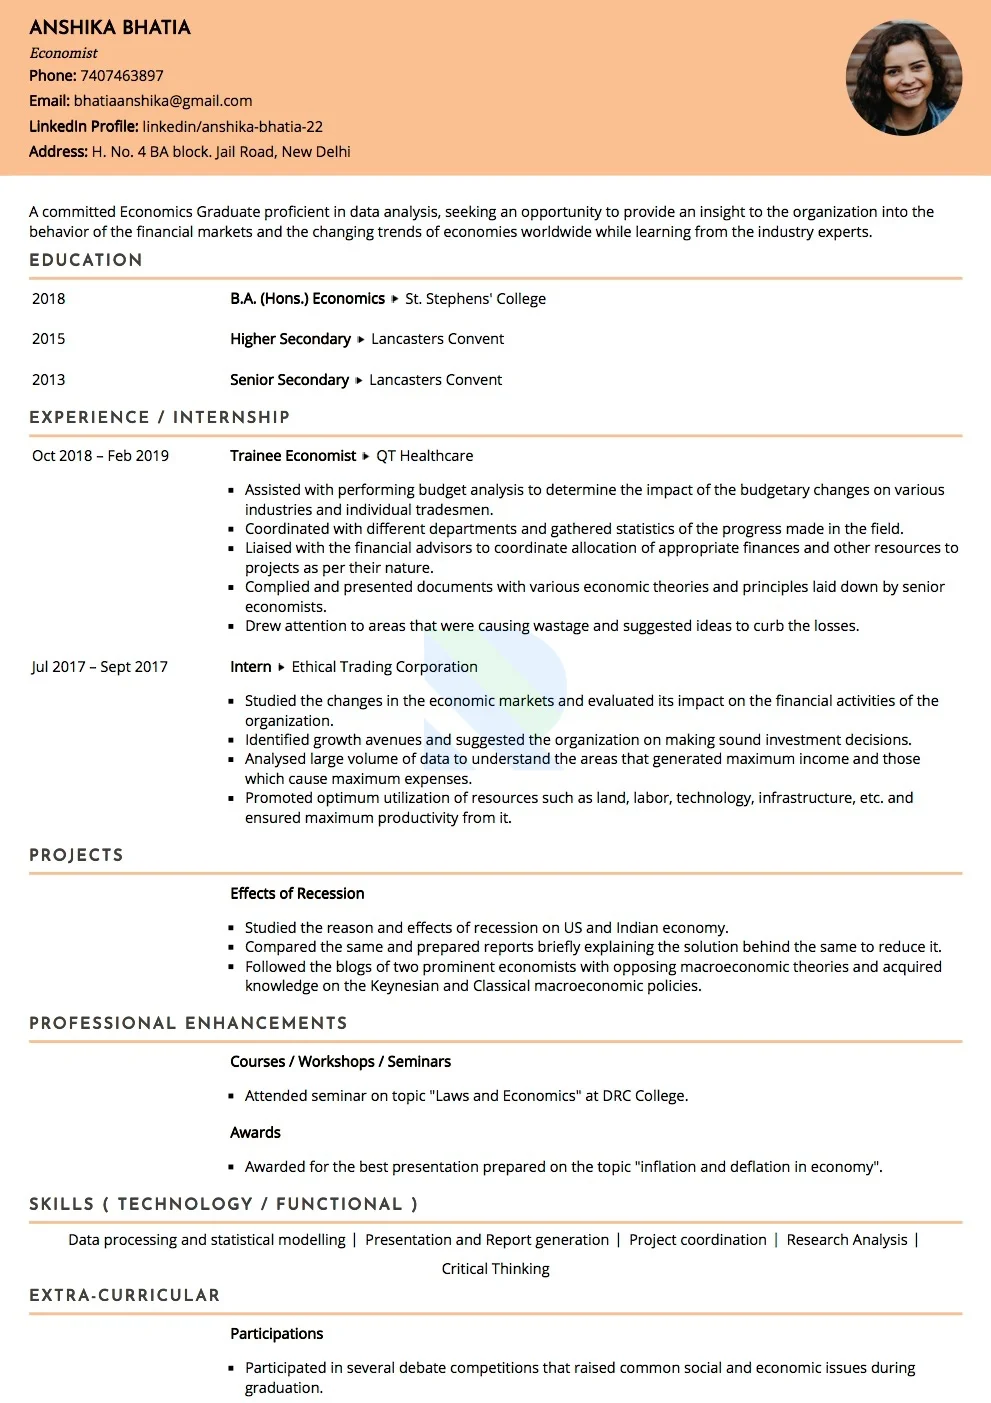 Sample Resume of Economist  | Free Resume Templates & Samples on Resumod.co